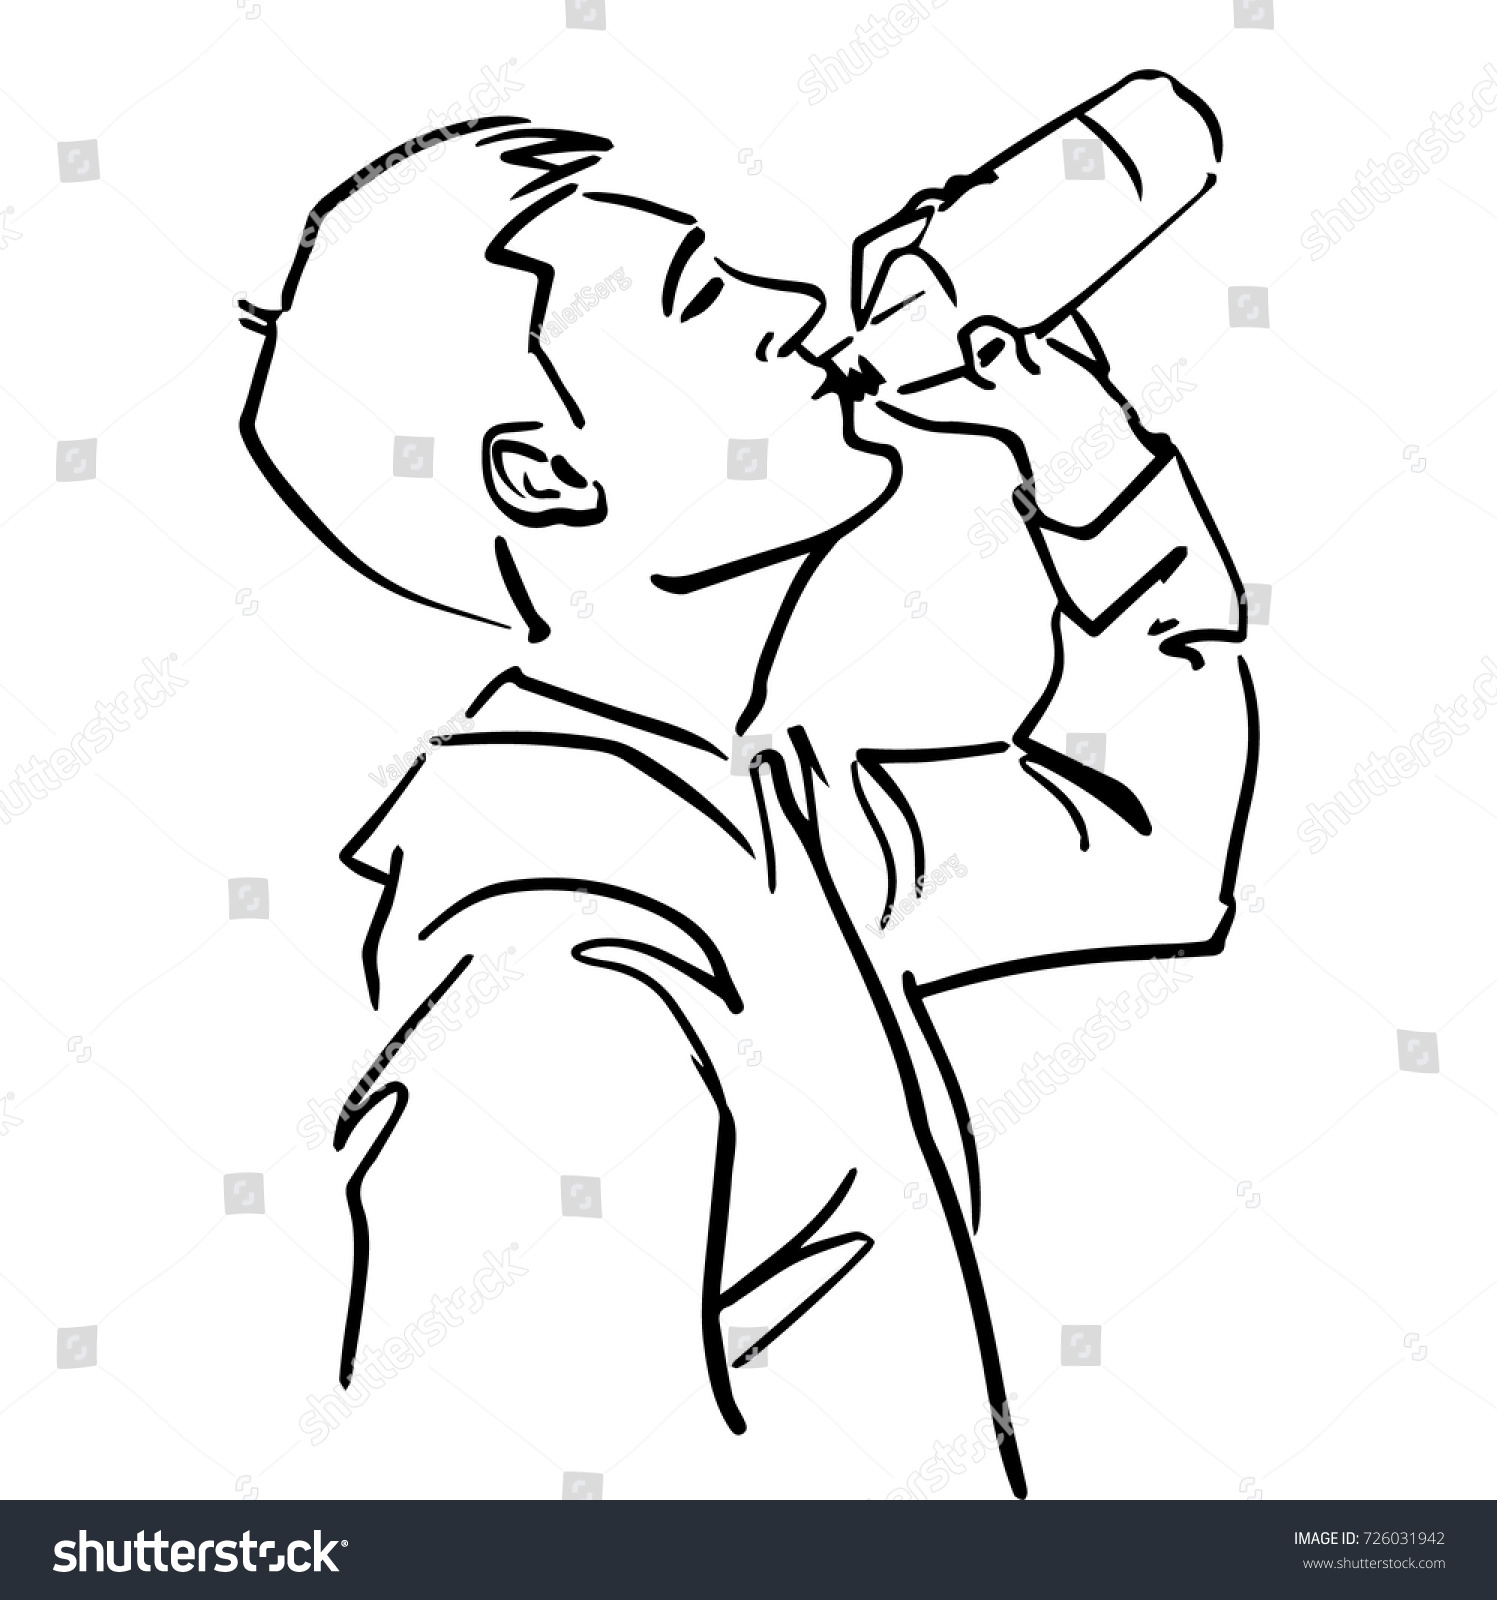 Man drinking sketch Images, Stock Photos & Vectors Shutterstock